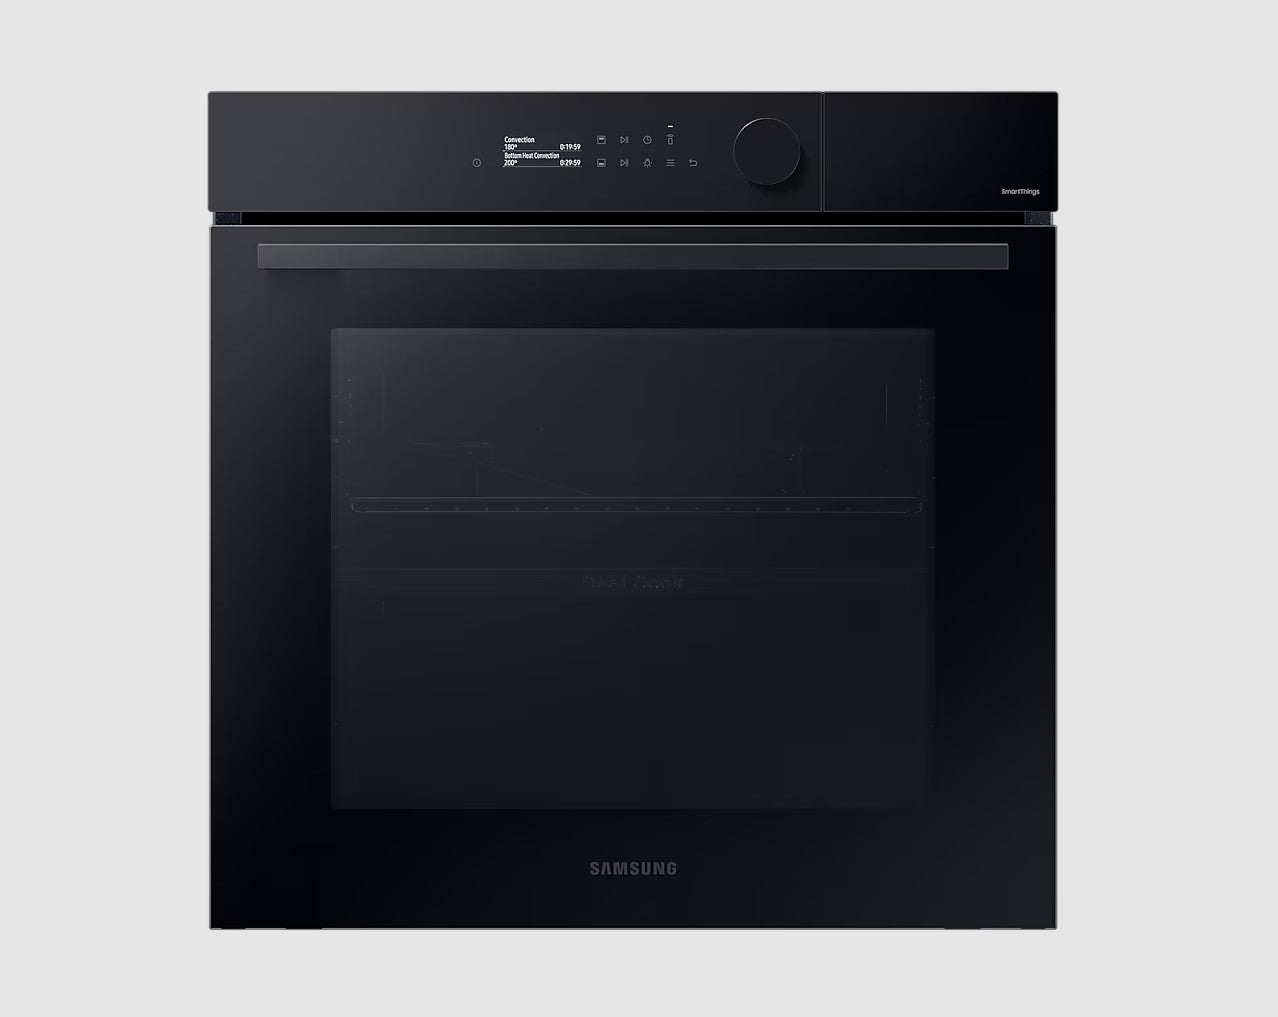 Samsung NV7B5675WAK Single Electric Oven Dual Cook in Black REFURBISHED